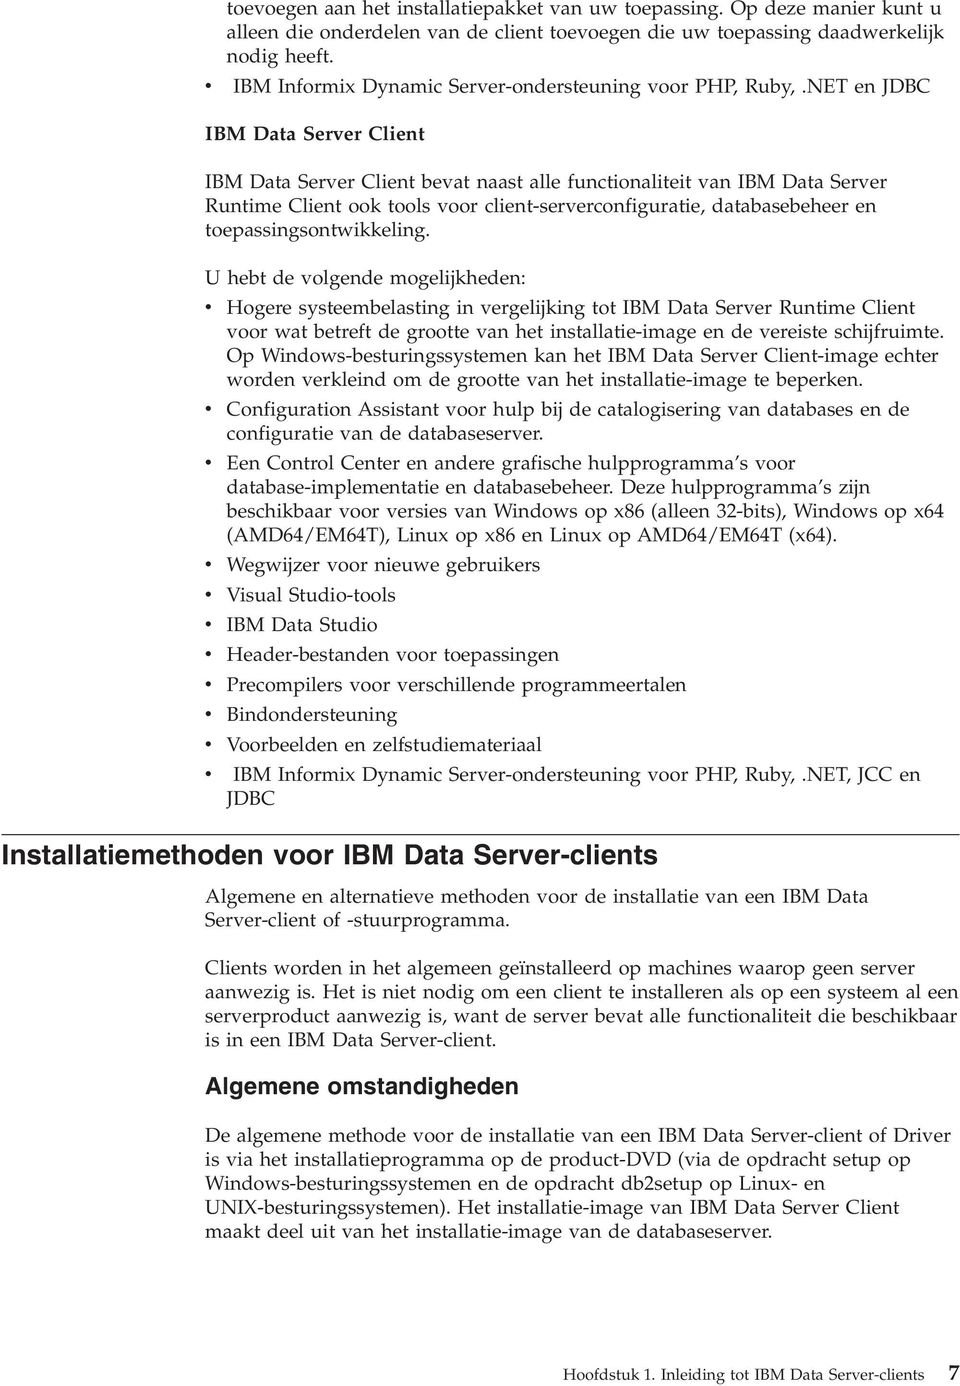 NET en JDBC IBM Data Serer Client IBM Data Serer Client beat naast alle functionaliteit an IBM Data Serer Runtime Client ook tools oor client-sererconfiguratie, databasebeheer en